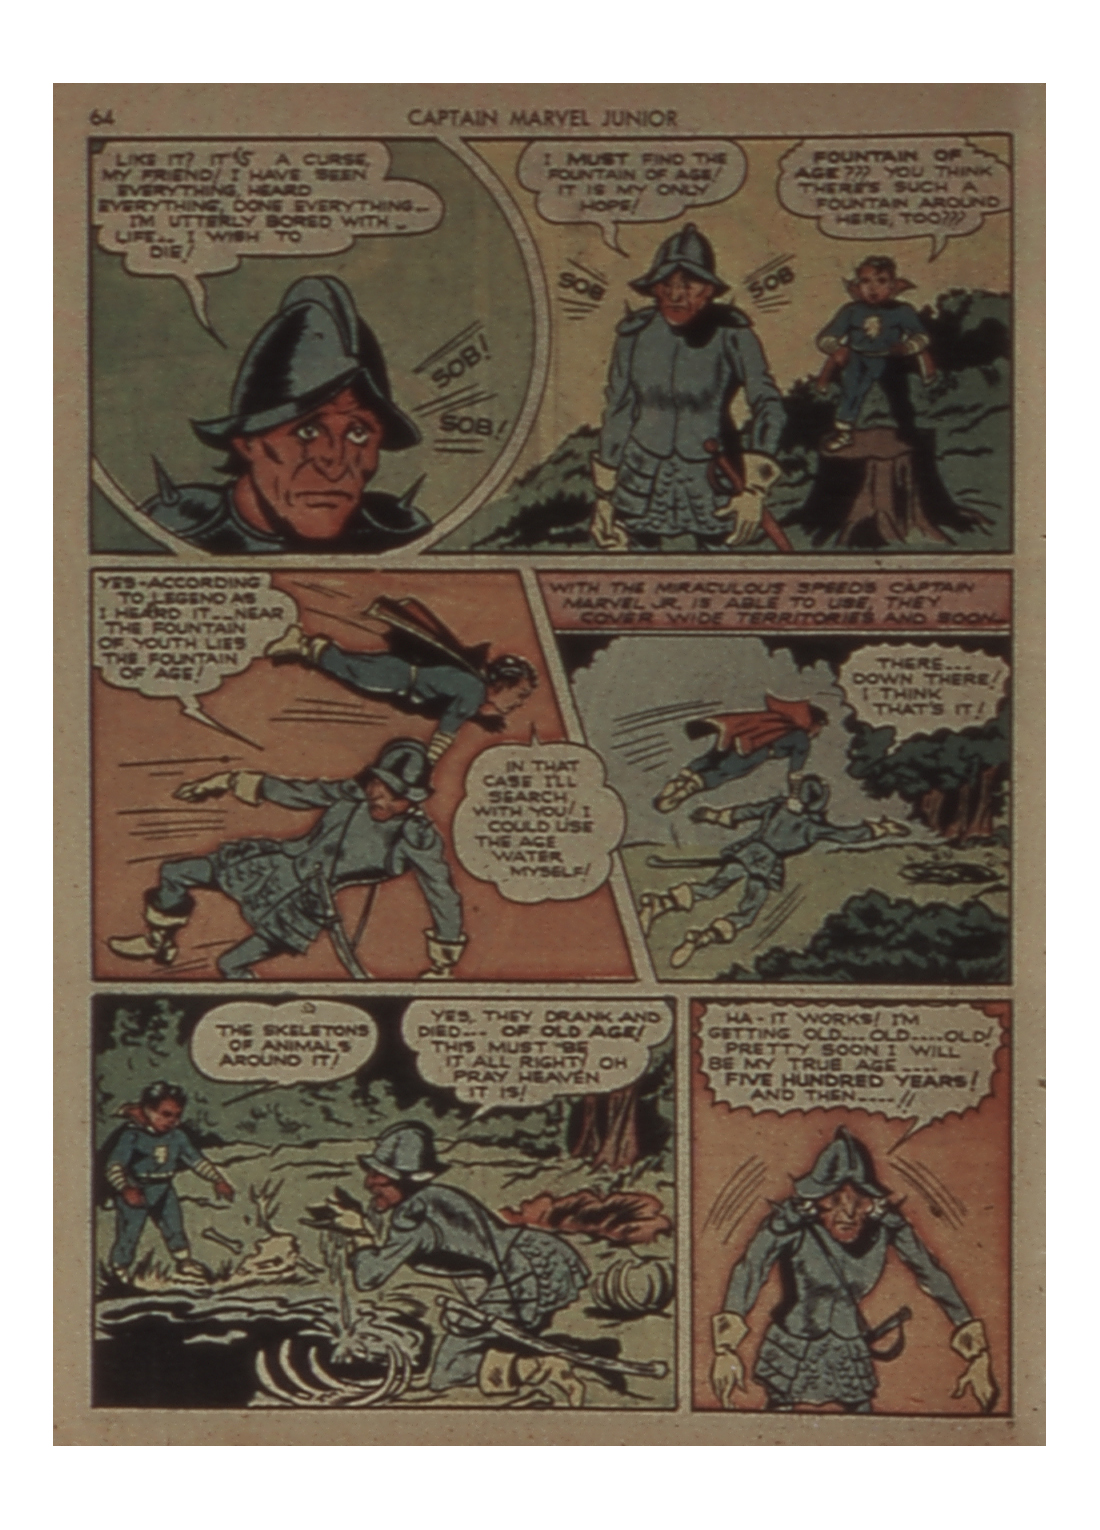 Read online Captain Marvel, Jr. comic -  Issue #5 - 64